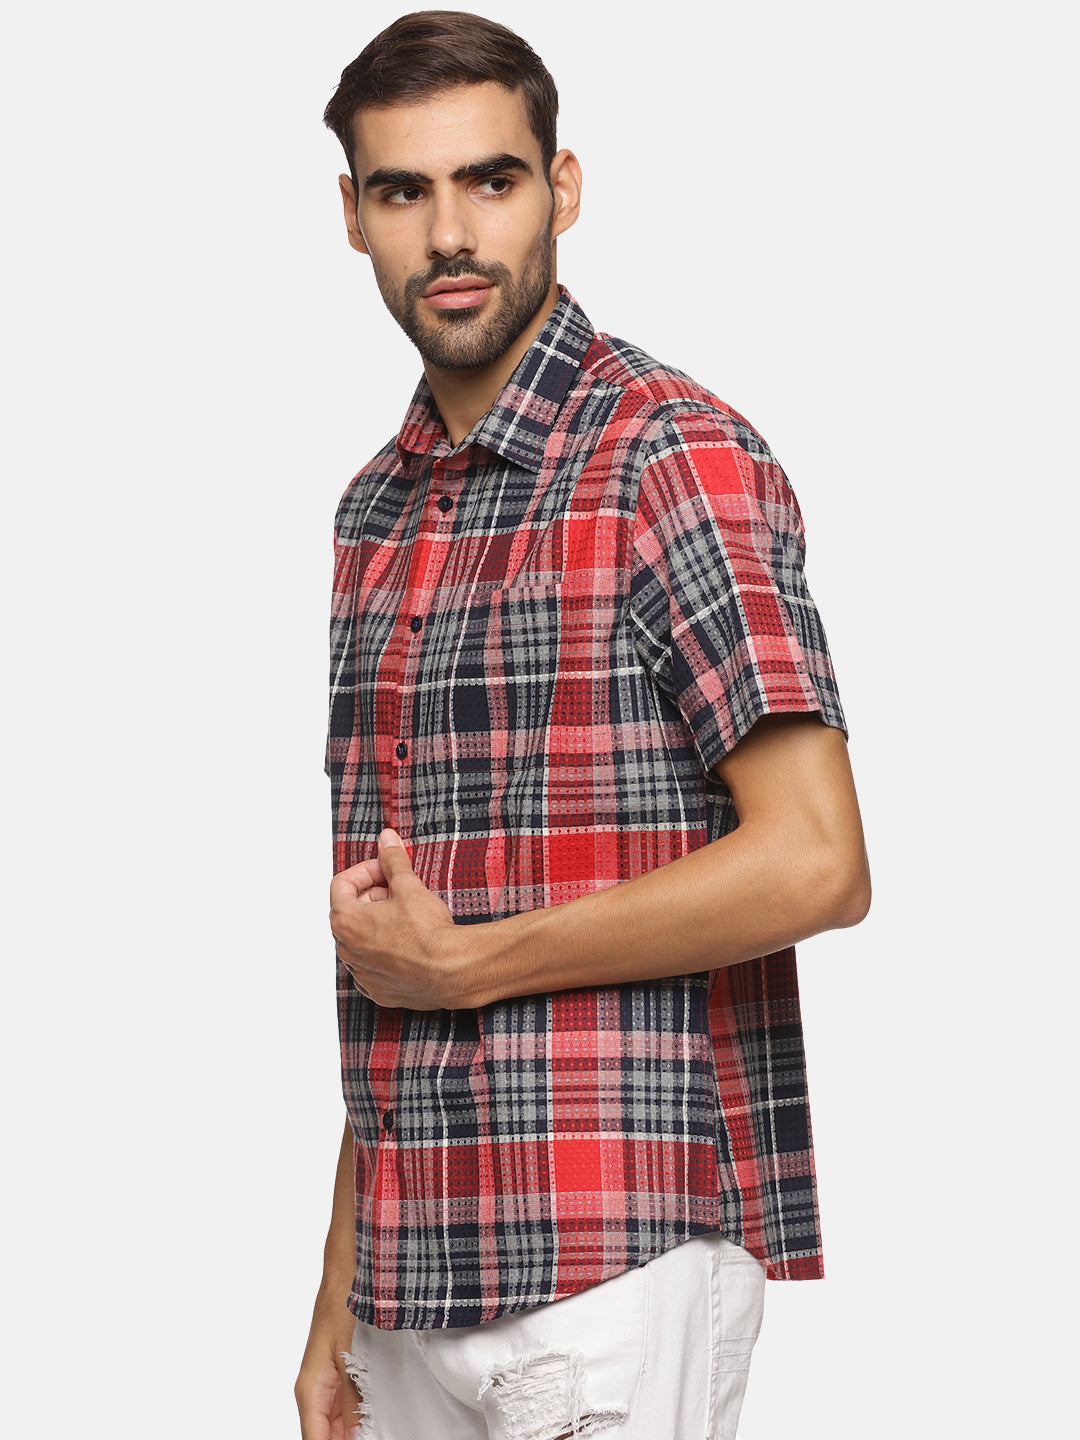 Men Red & Black Checkered Slim Fit Casual Shirt, Men's Half Sleeve Cotton Shirt